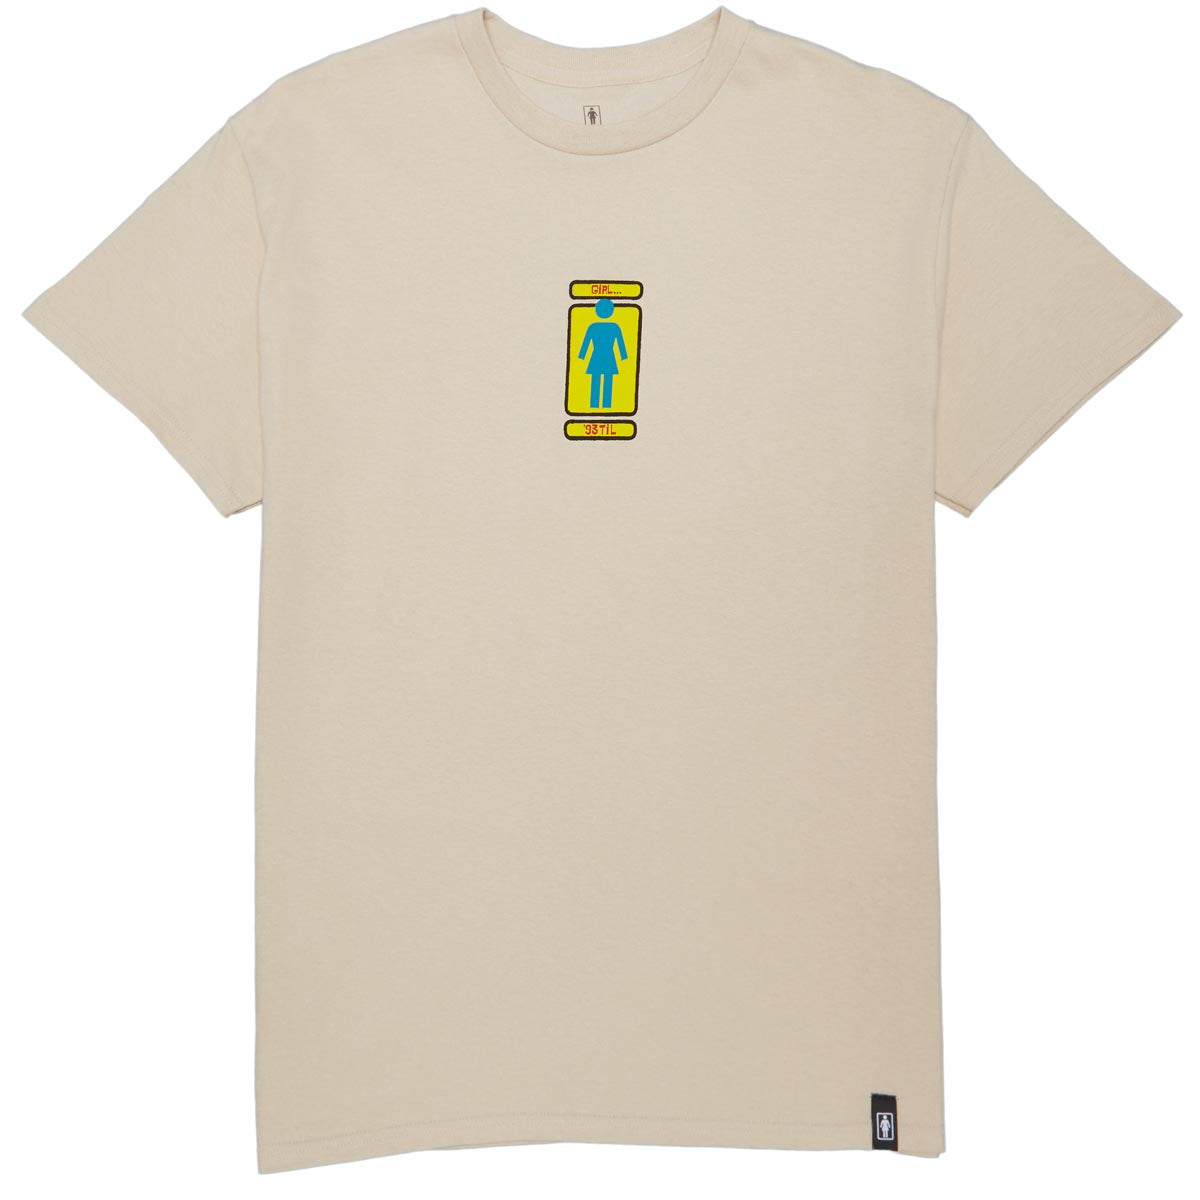 Girl Hand Shakers T-Shirt - Sand image 1